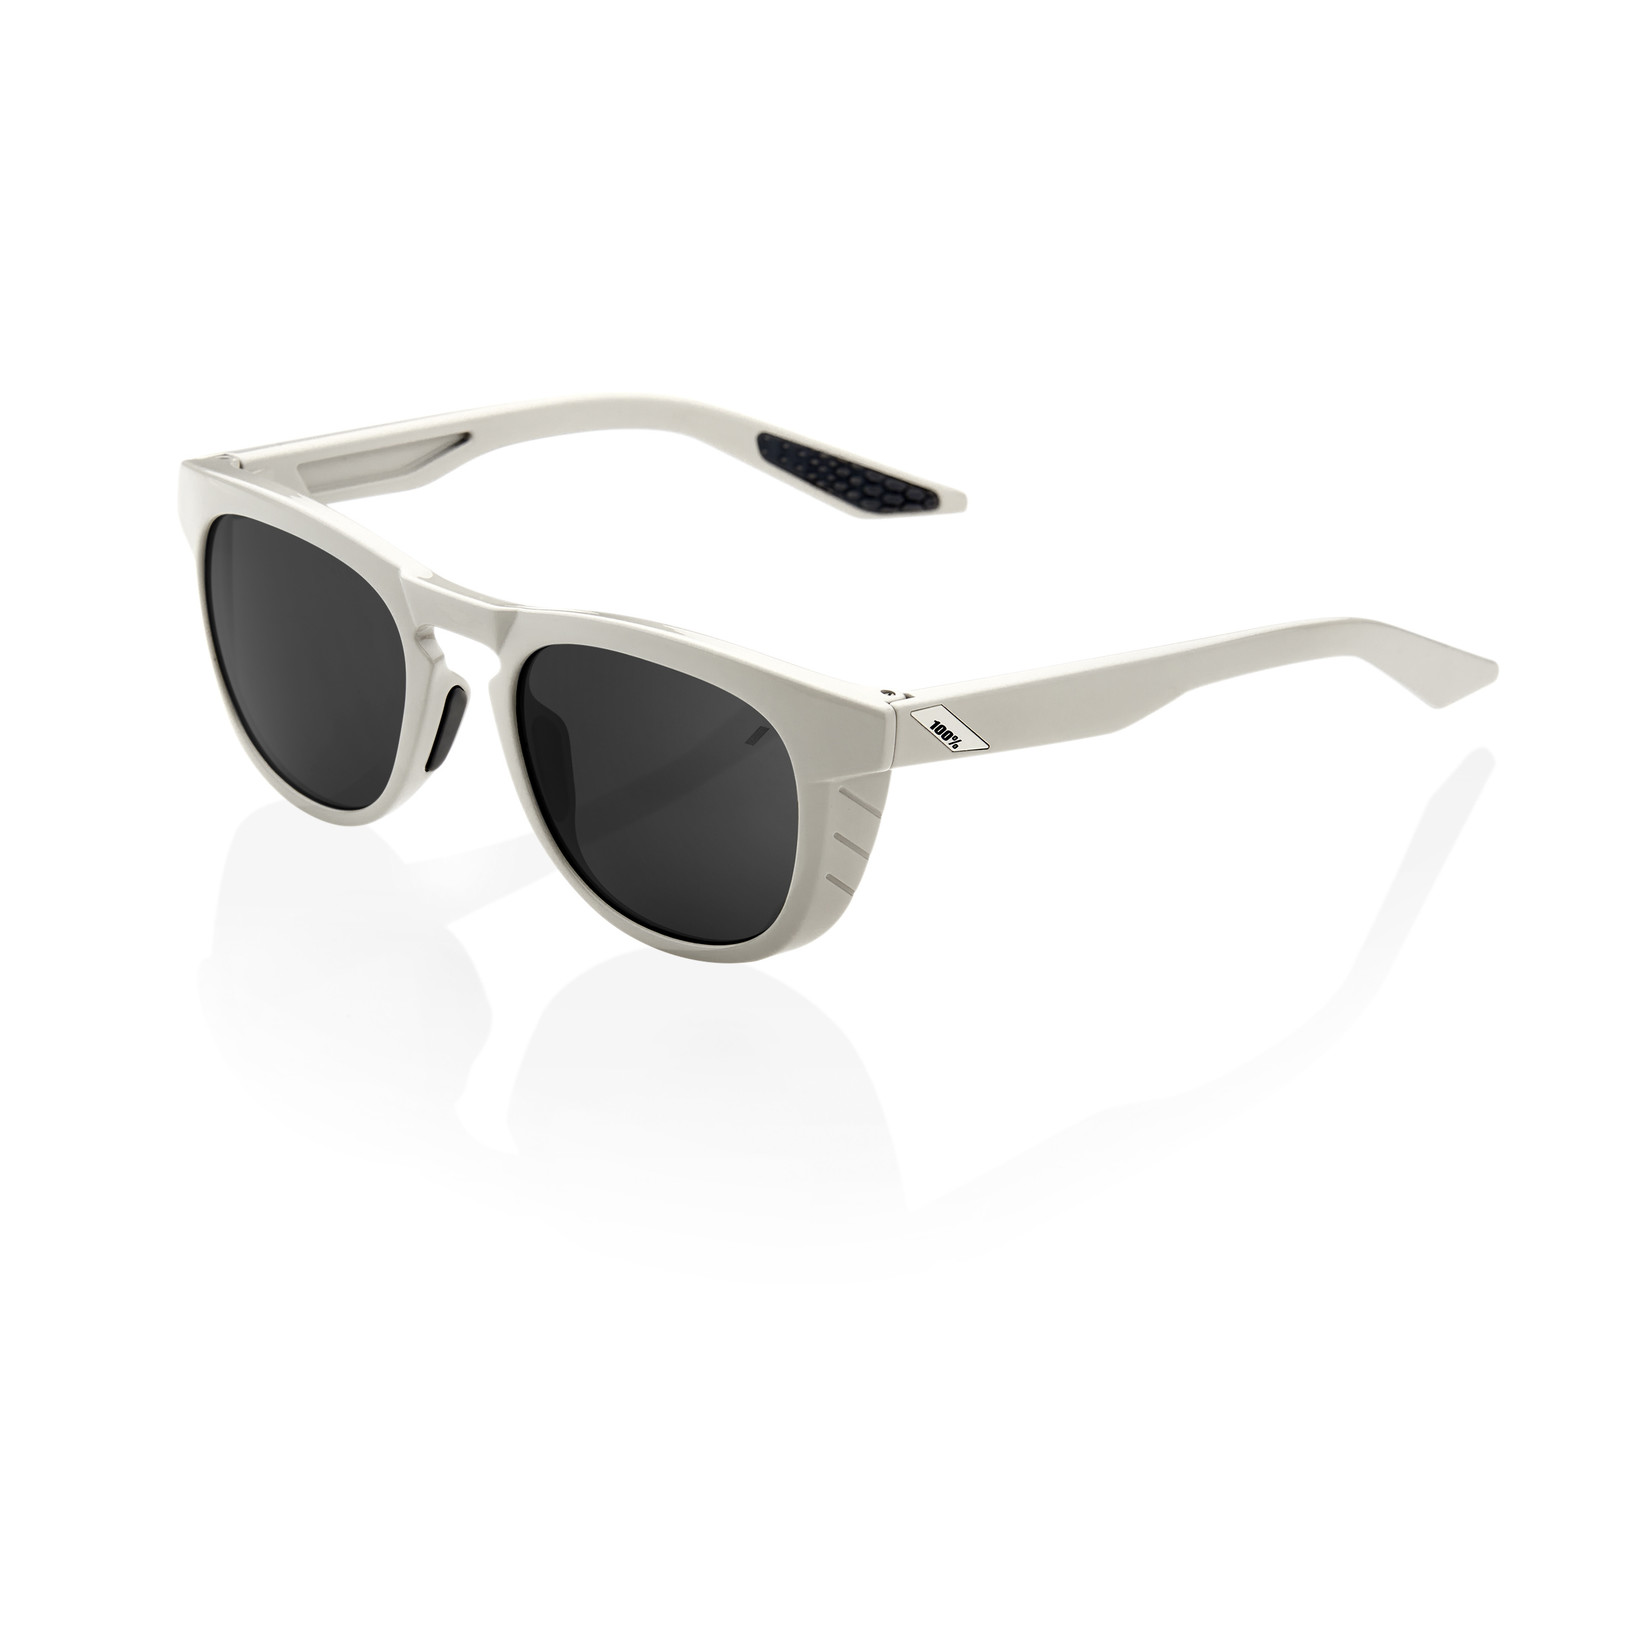 100 Percent 100% Slent 100% UV Protection Bike Sunglasses Polished Haze - Smoke